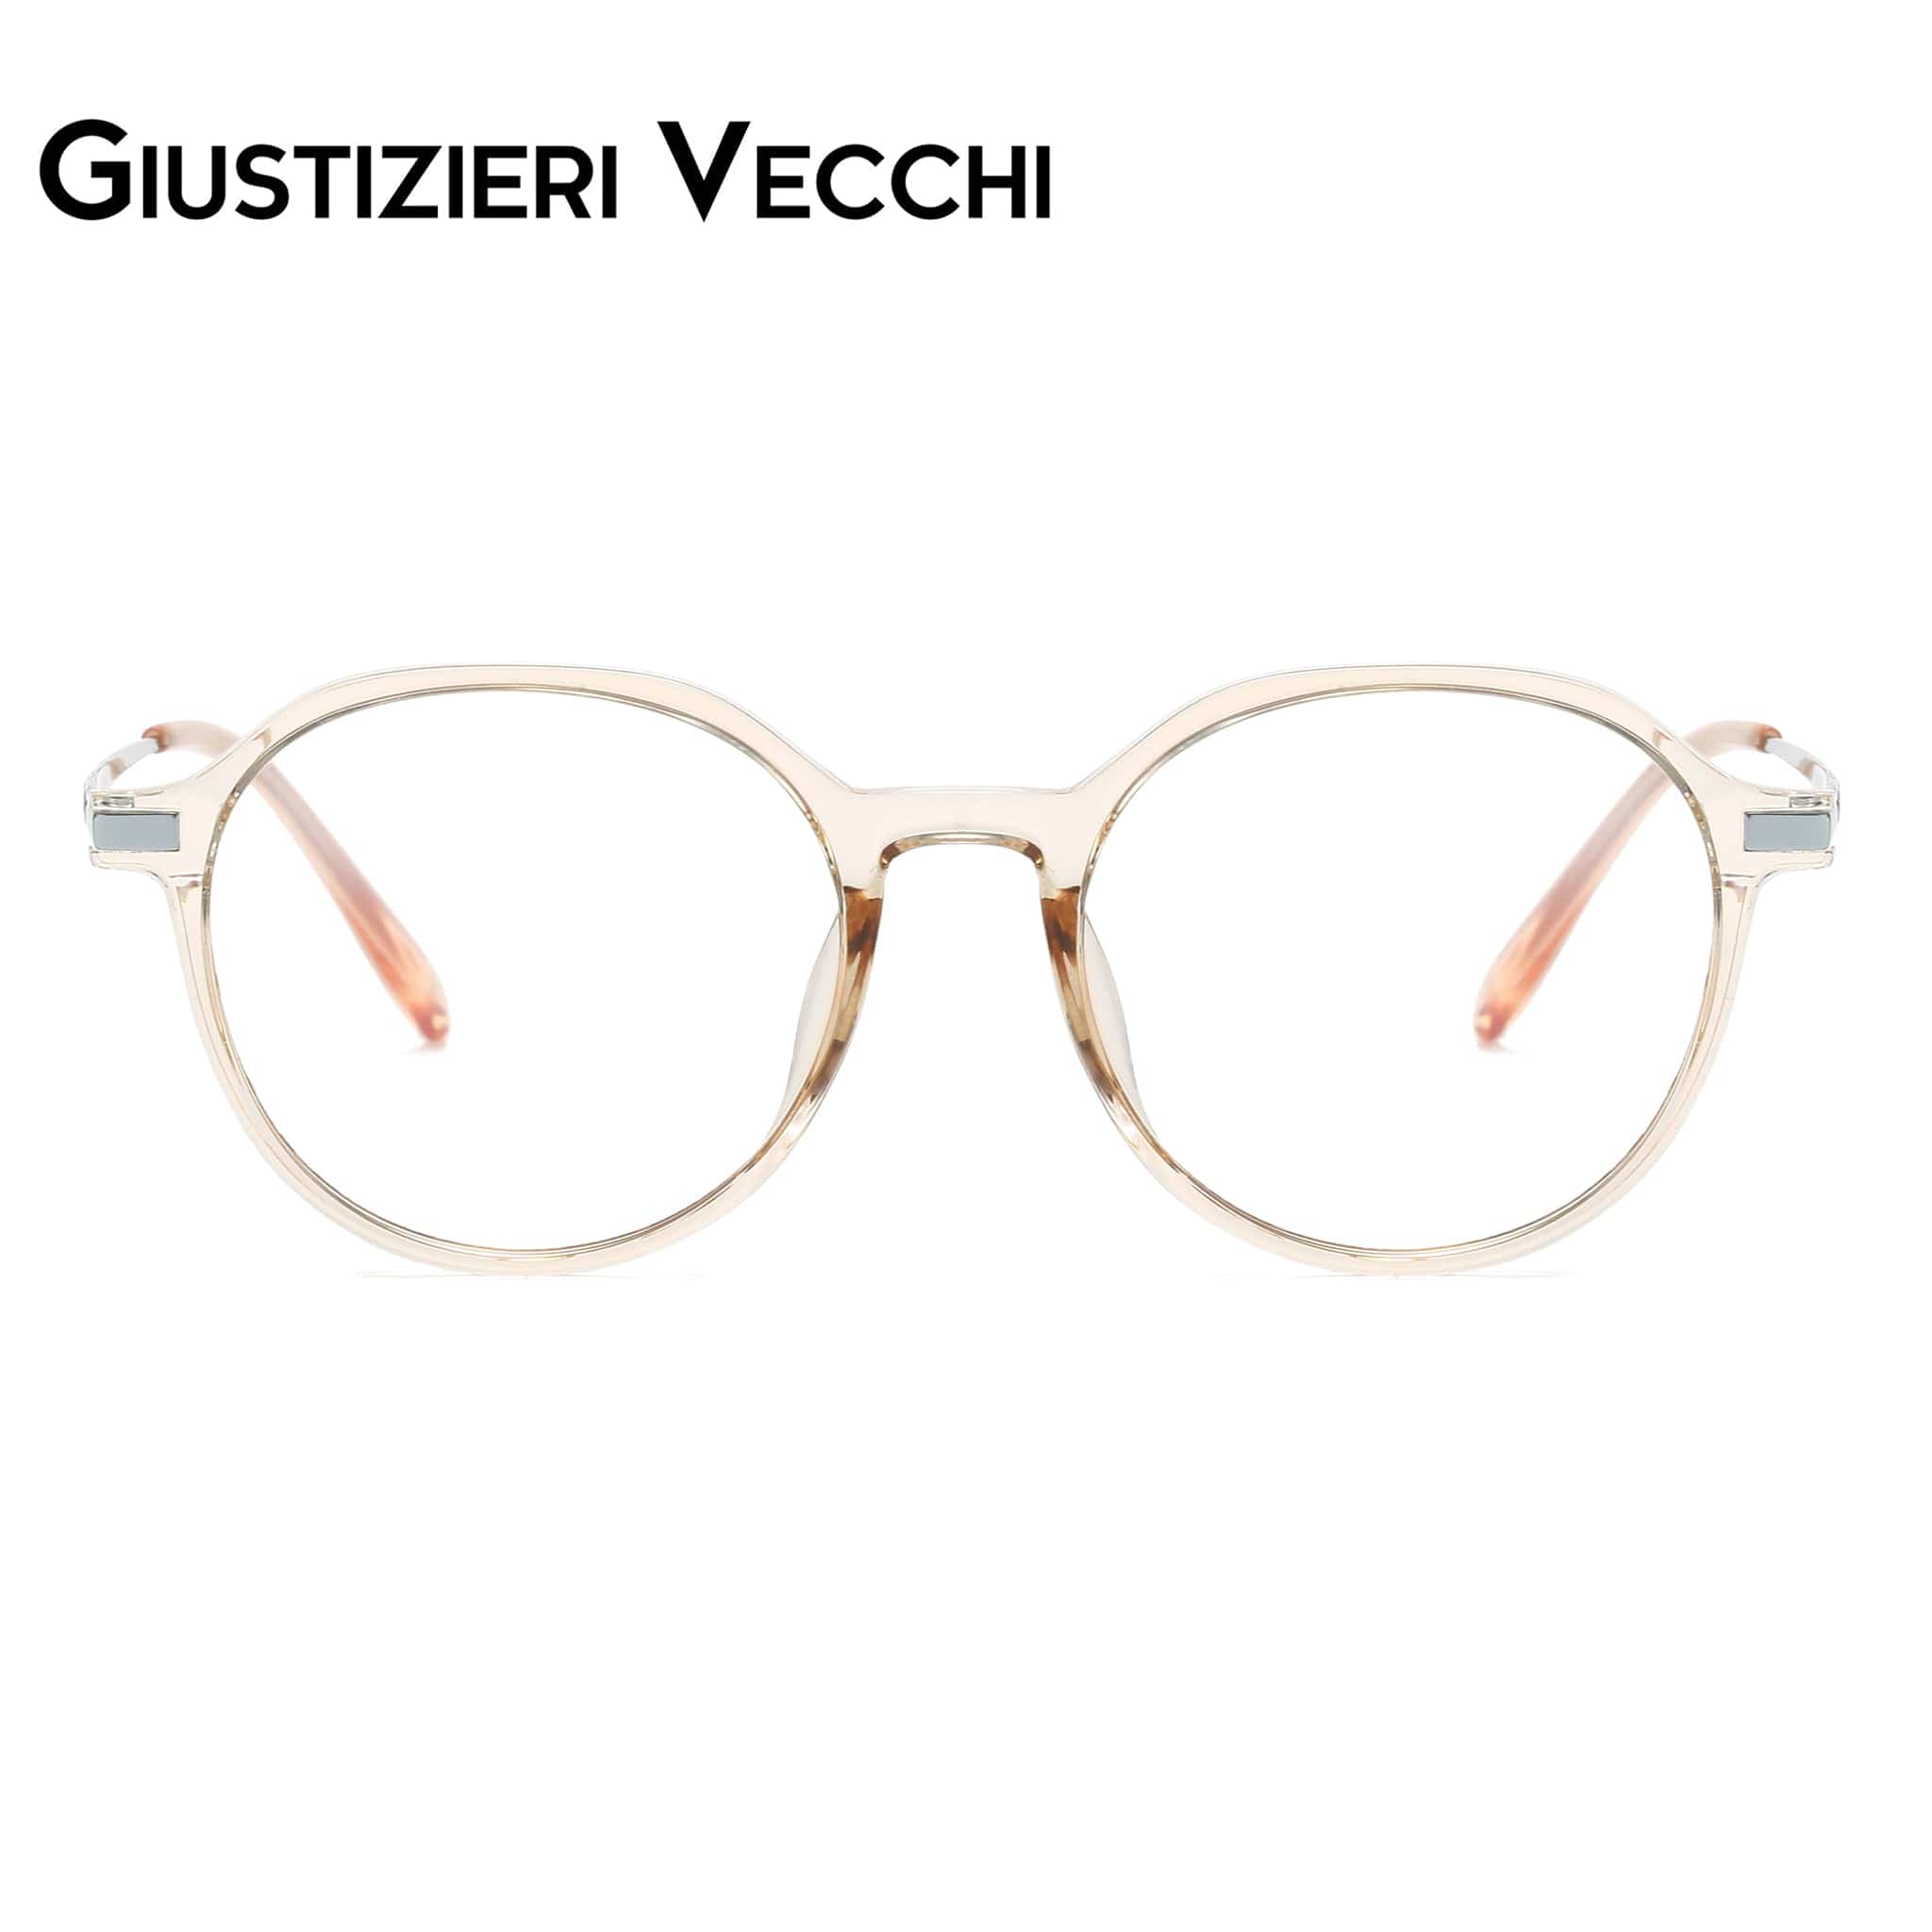 GIUSTIZIERI VECCHI Eyeglasses Small / Nutmeg Crystal StarBurst Duo